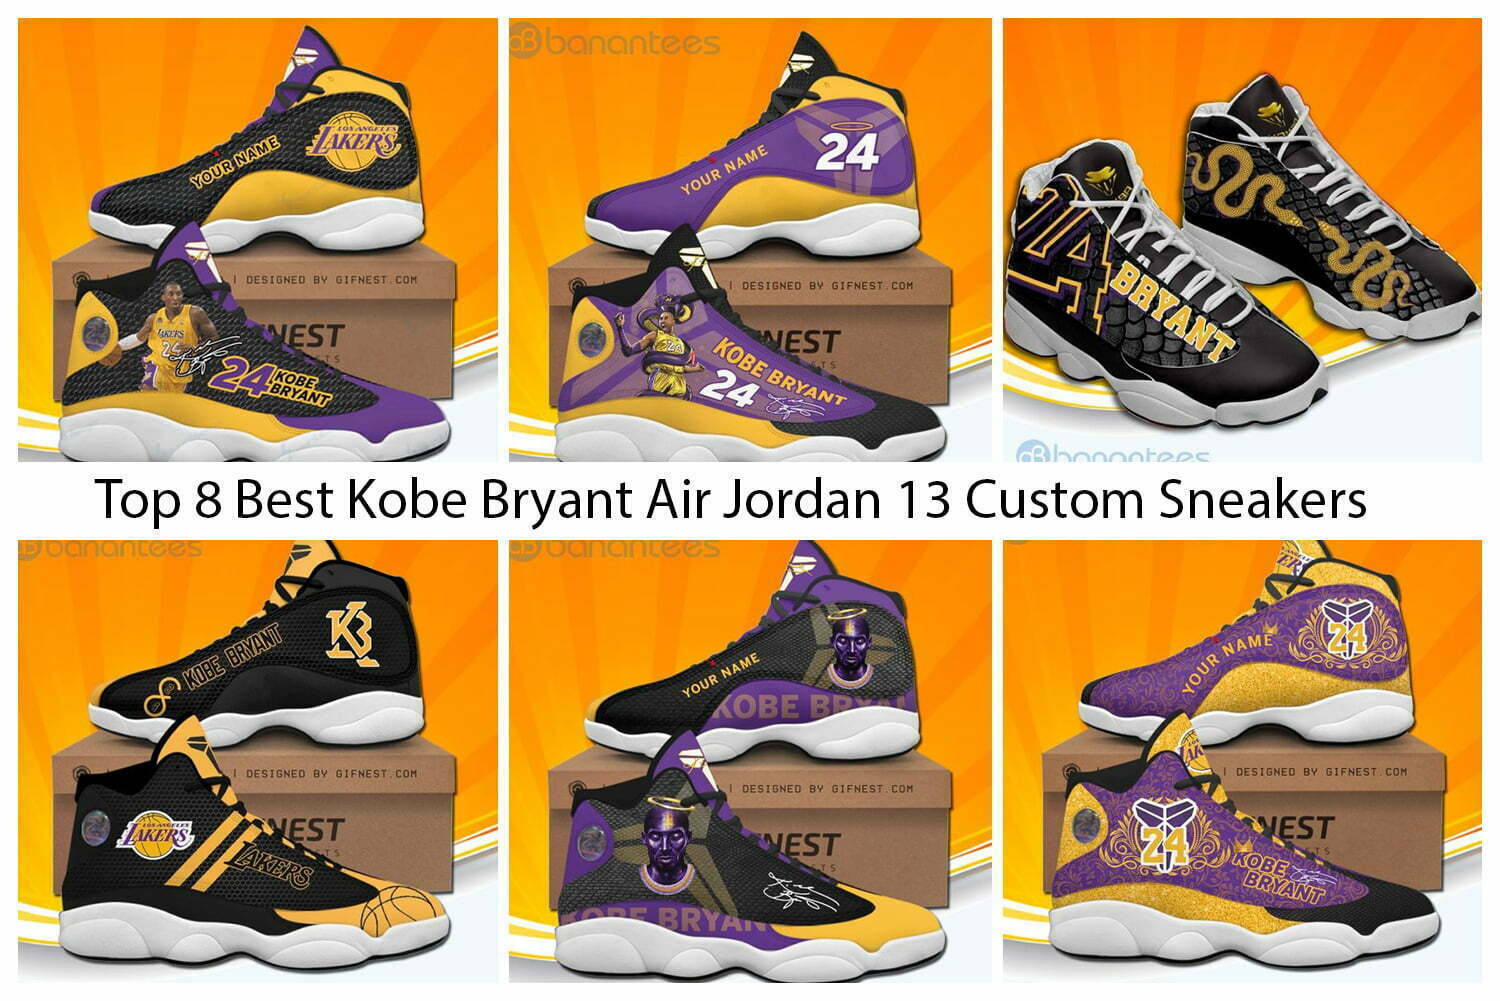 Top 8 Best Kobe Bryant Air Jordan 13 Custom Sneakers